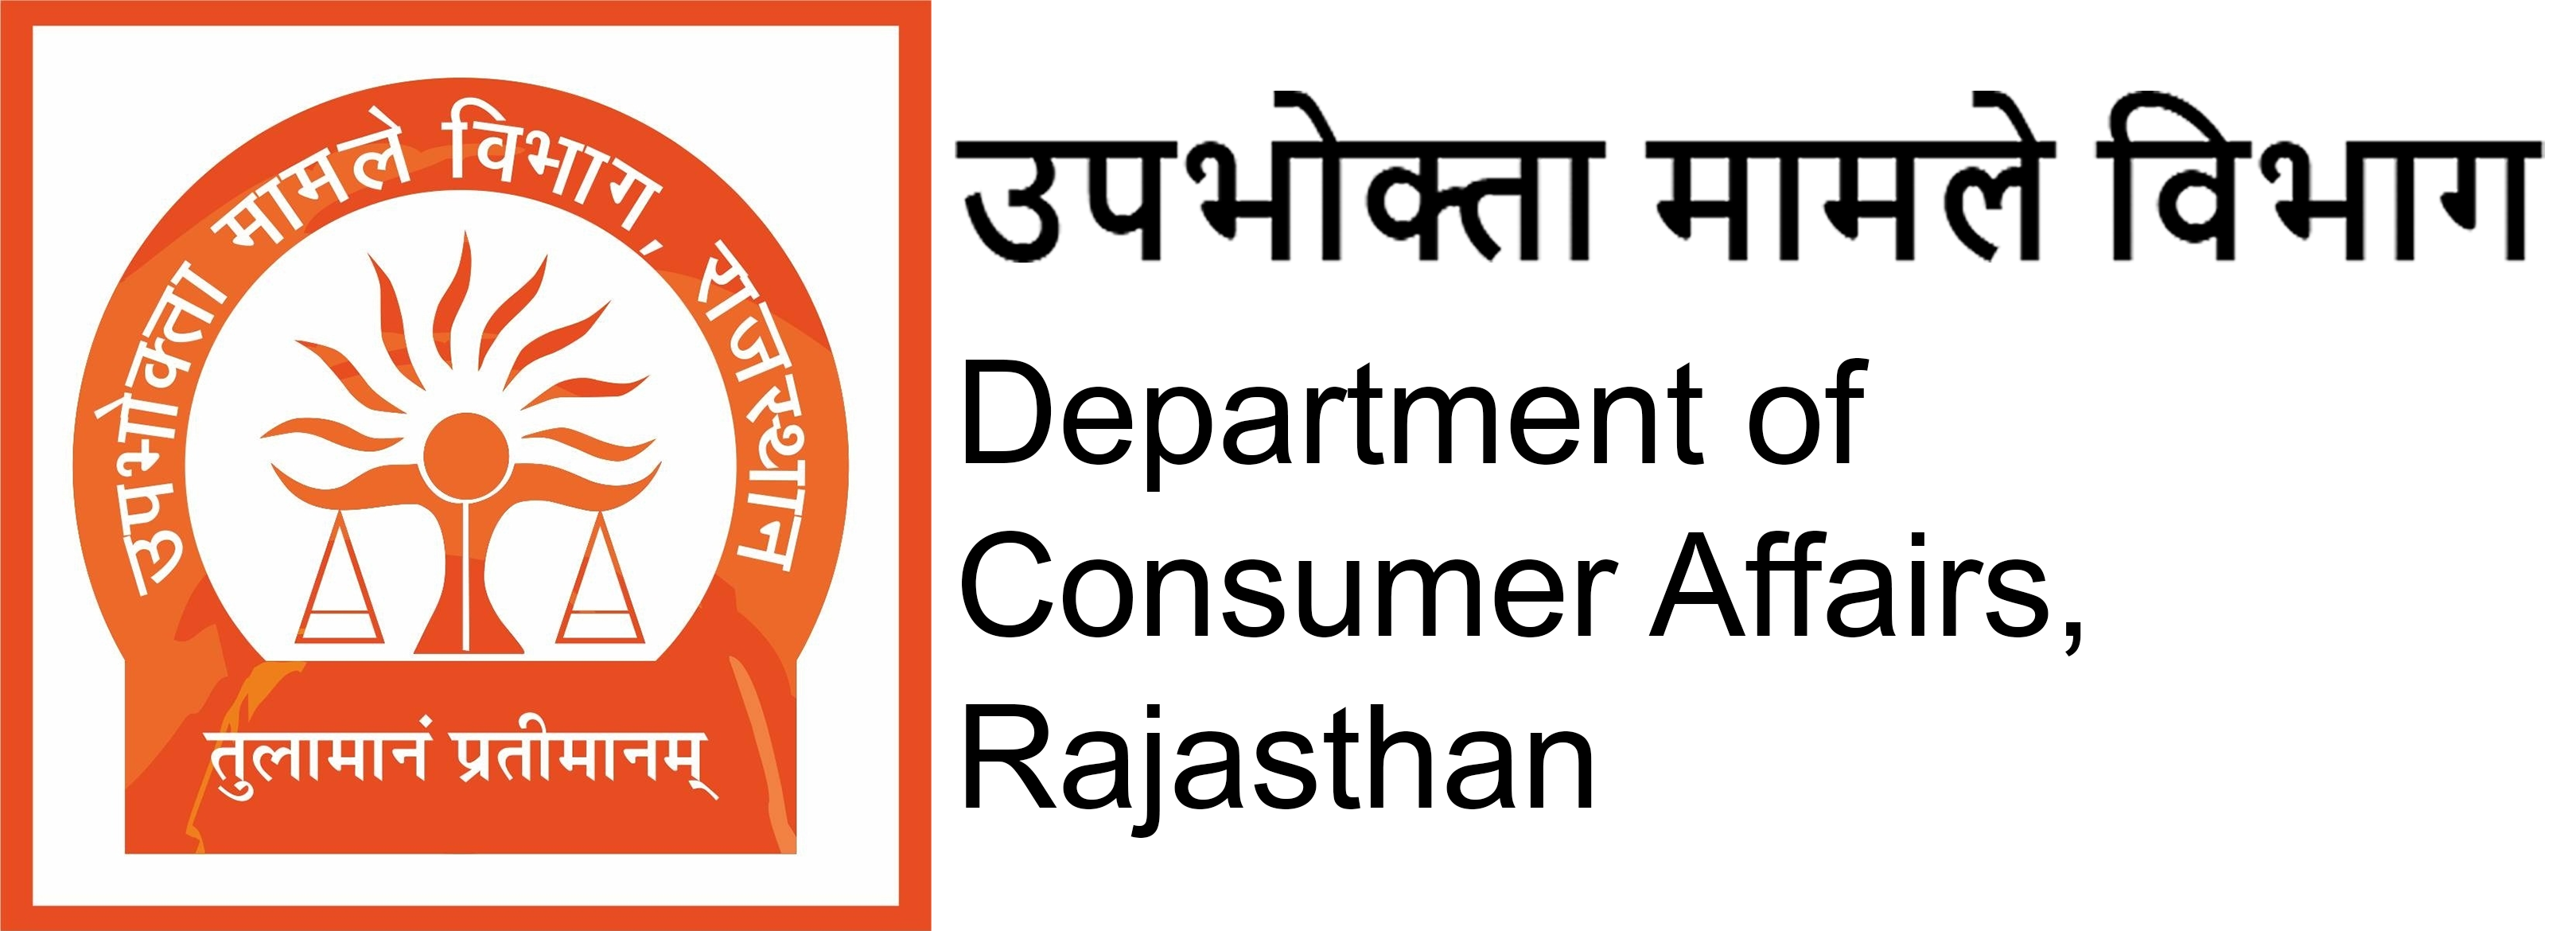 Department of Consumer Affairs, Rajasthan